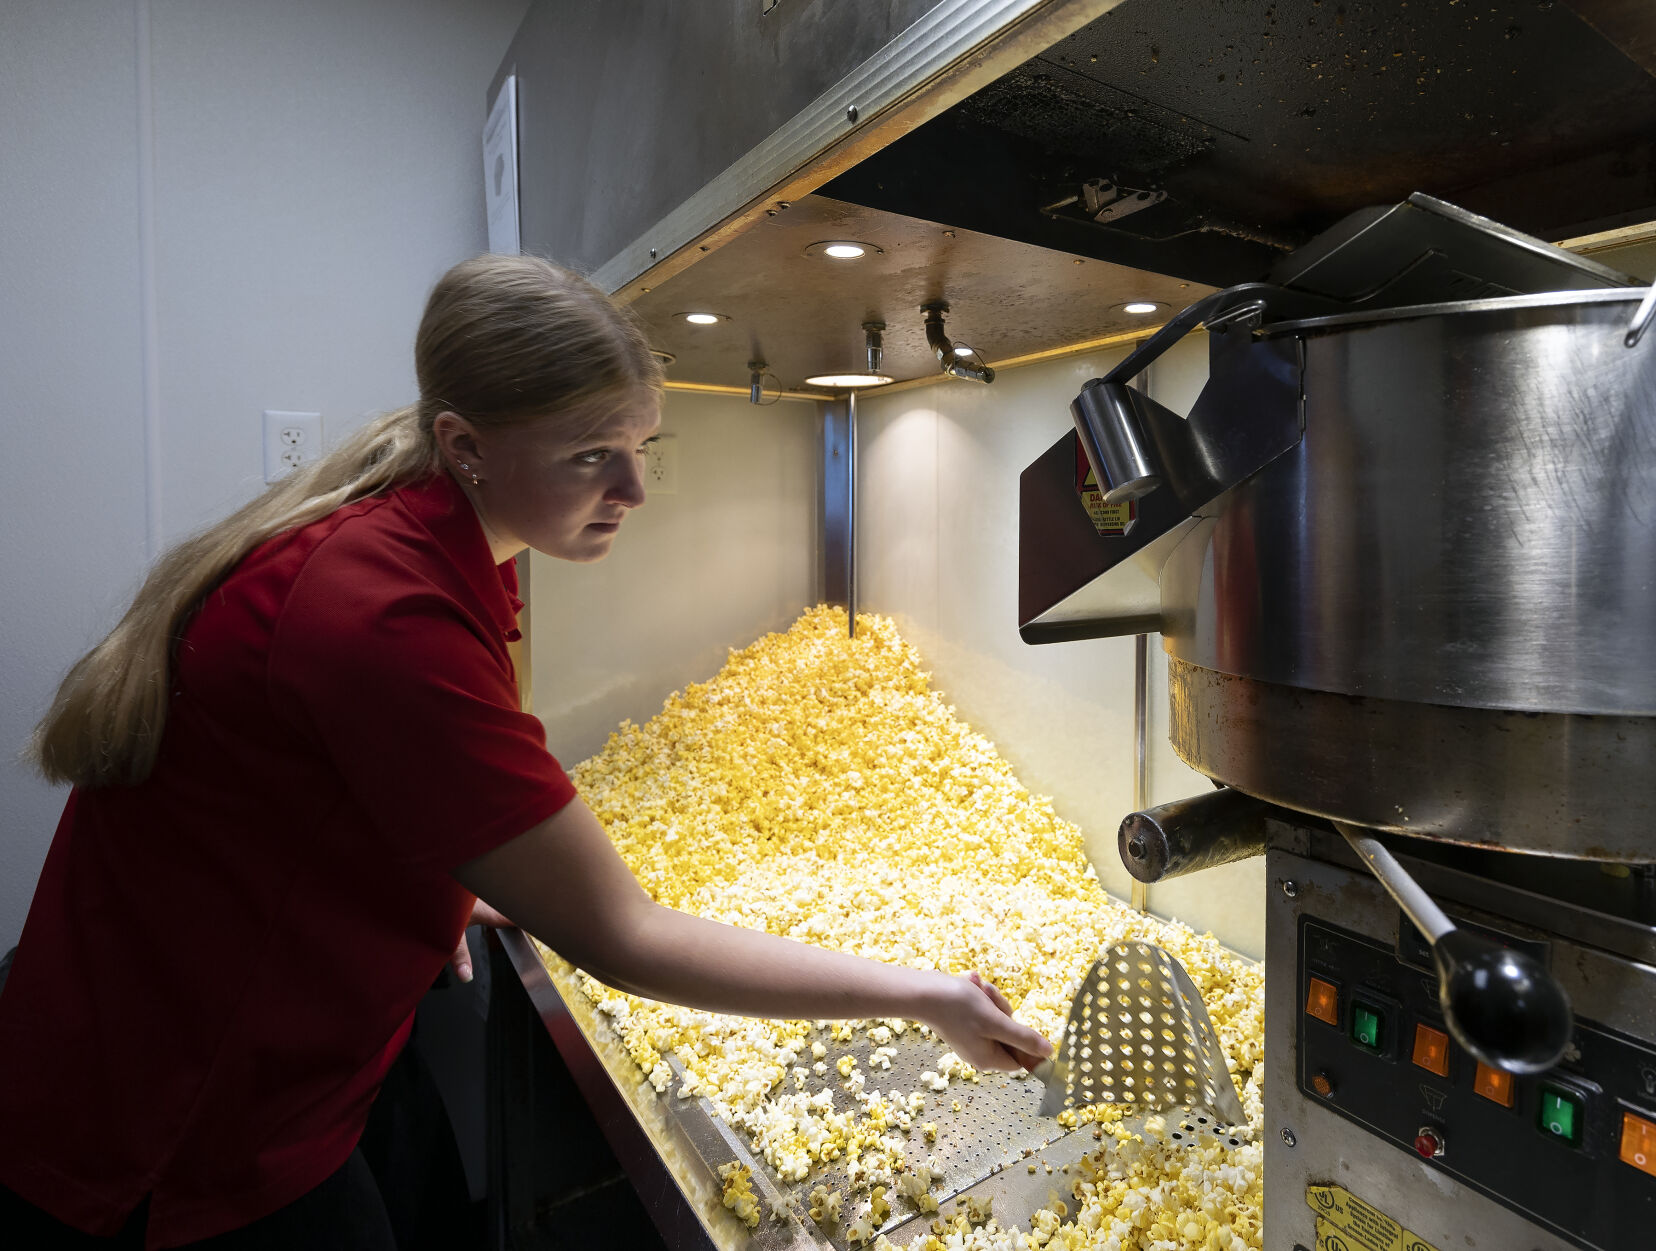 Supervisor Payton Daack scoops popcorn.    PHOTO CREDIT: Stephen Gassman
Telegraph Herald